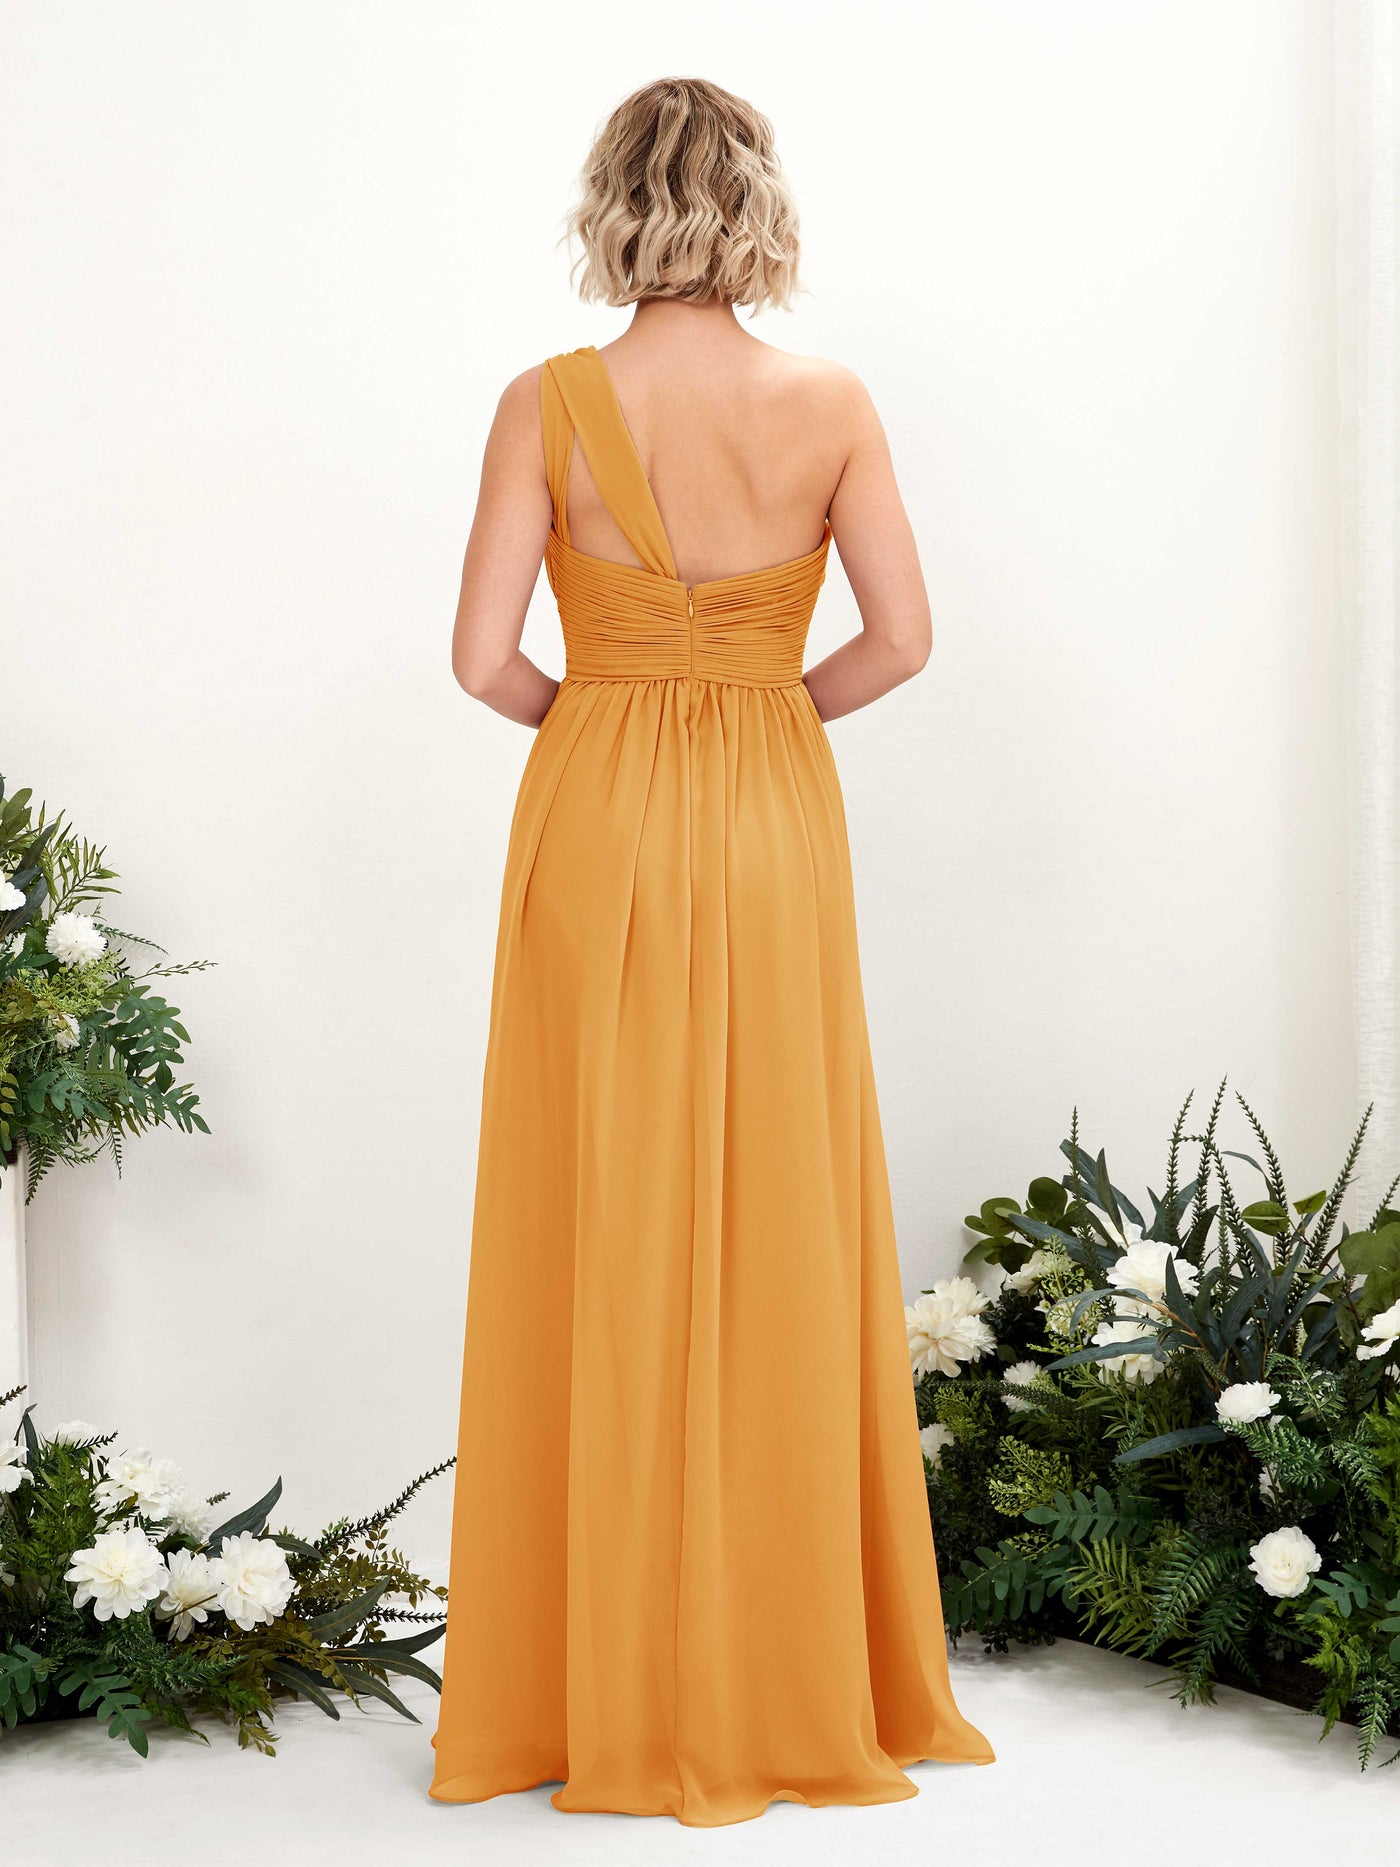 One Shoulder Sleeveless Chiffon Bridesmaid Dress - Mango (81225002)#color_mango